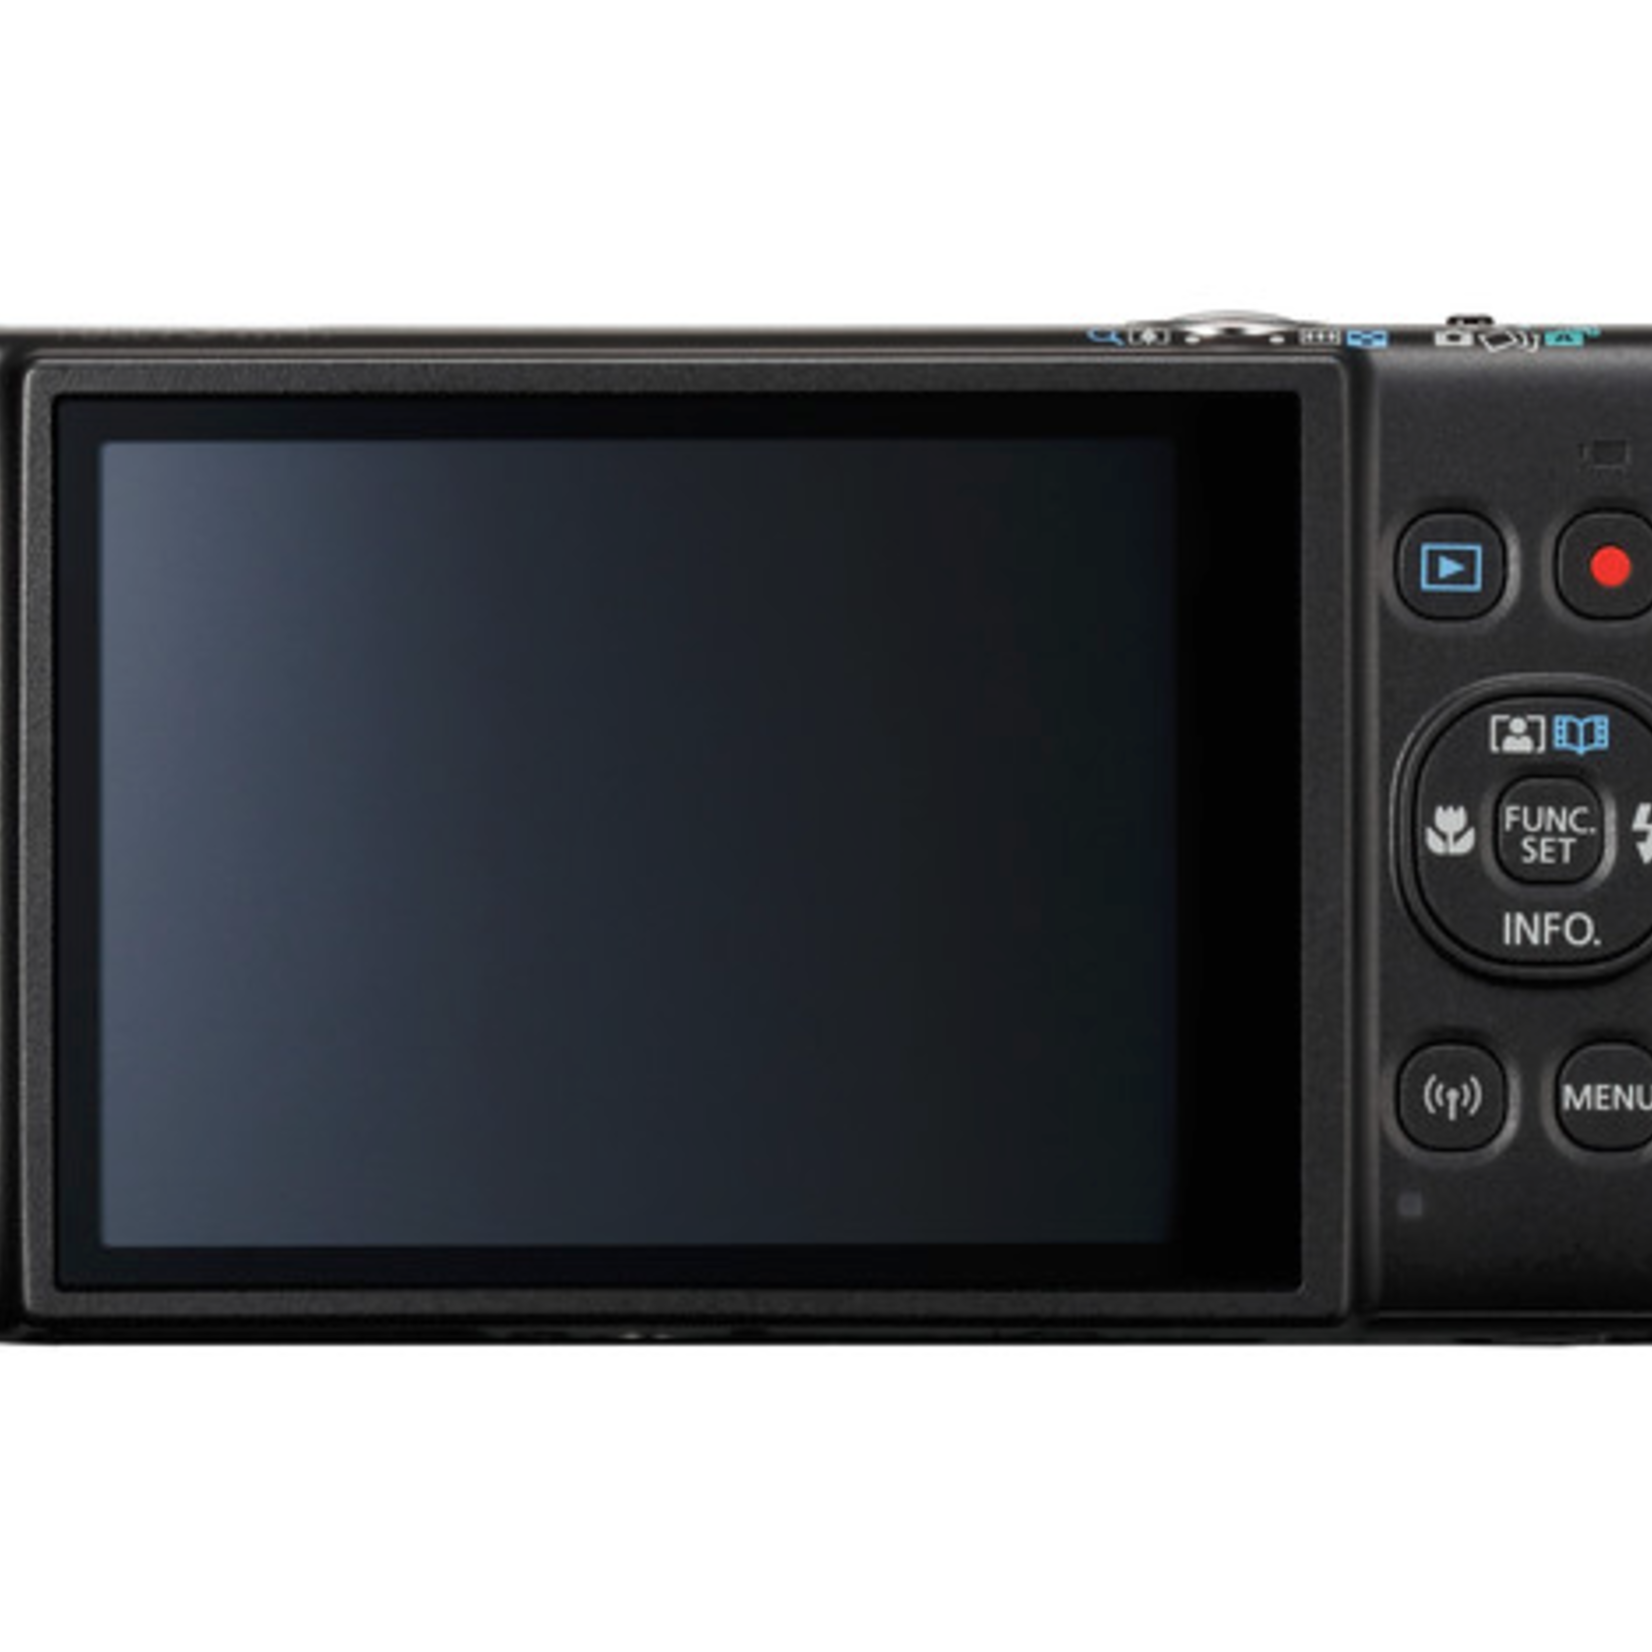 Canon Canon PowerShot ELPH 360 HS Digital Camera (Black)